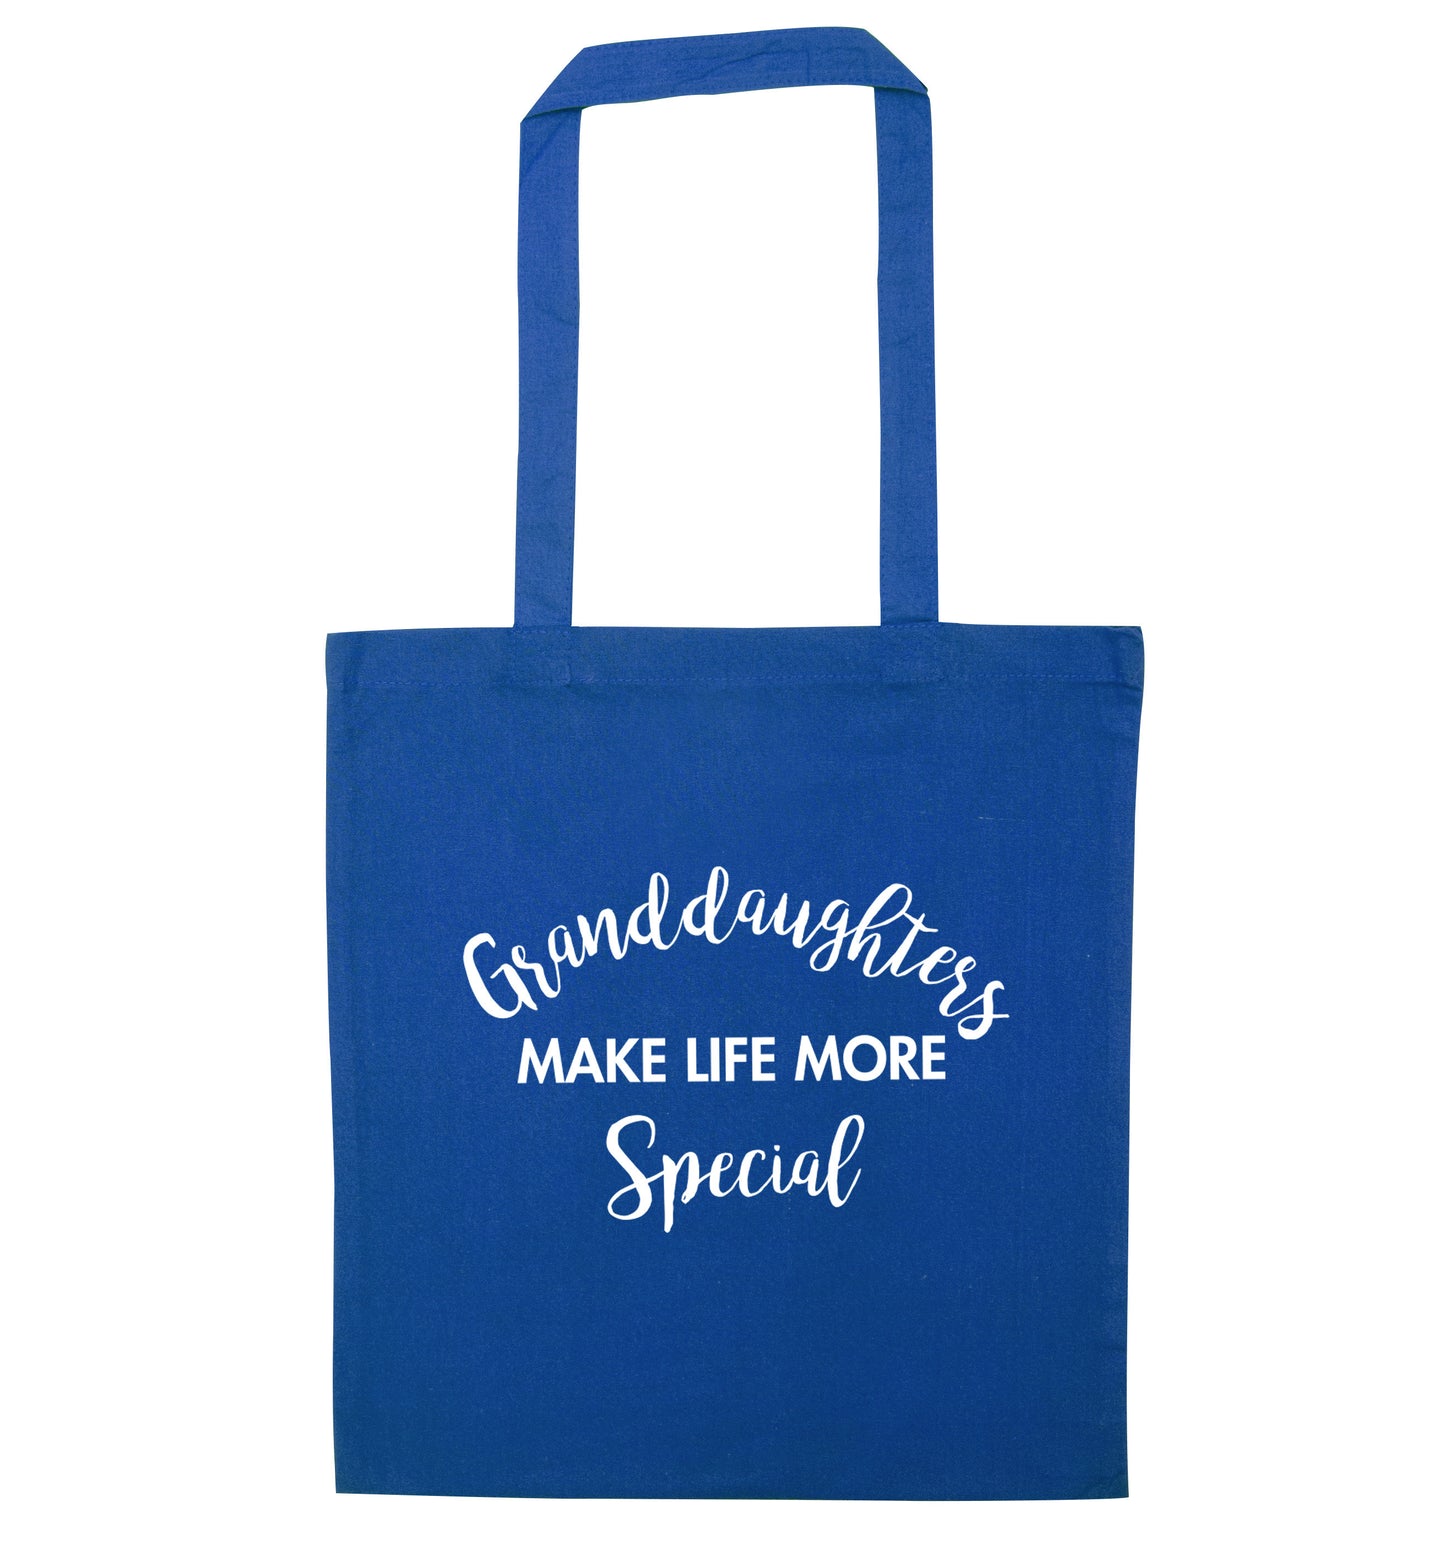 Granddaughters make life more special blue tote bag